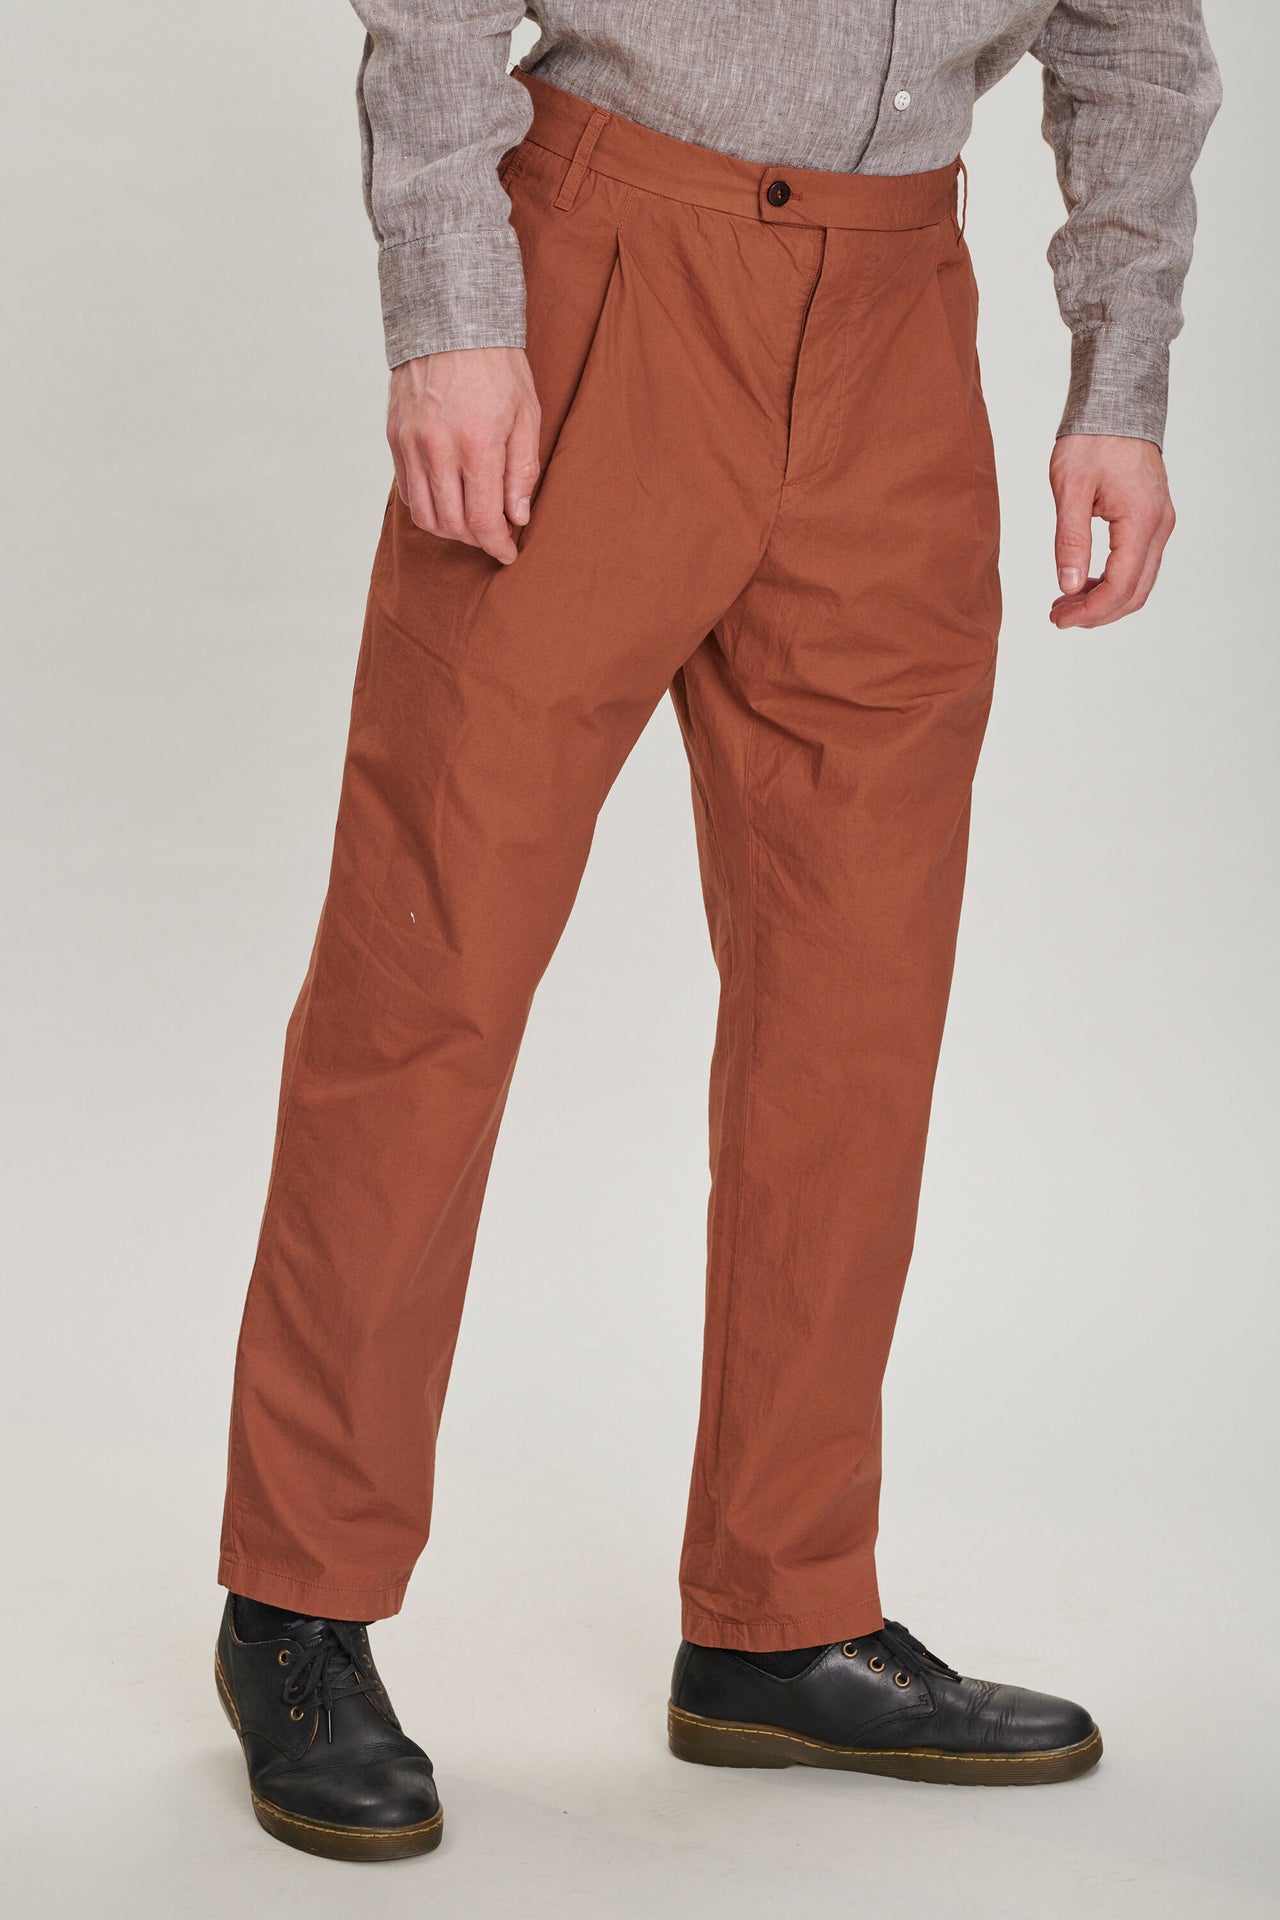 Trousers in a Rusty Coloured Italian Cotton Poplin